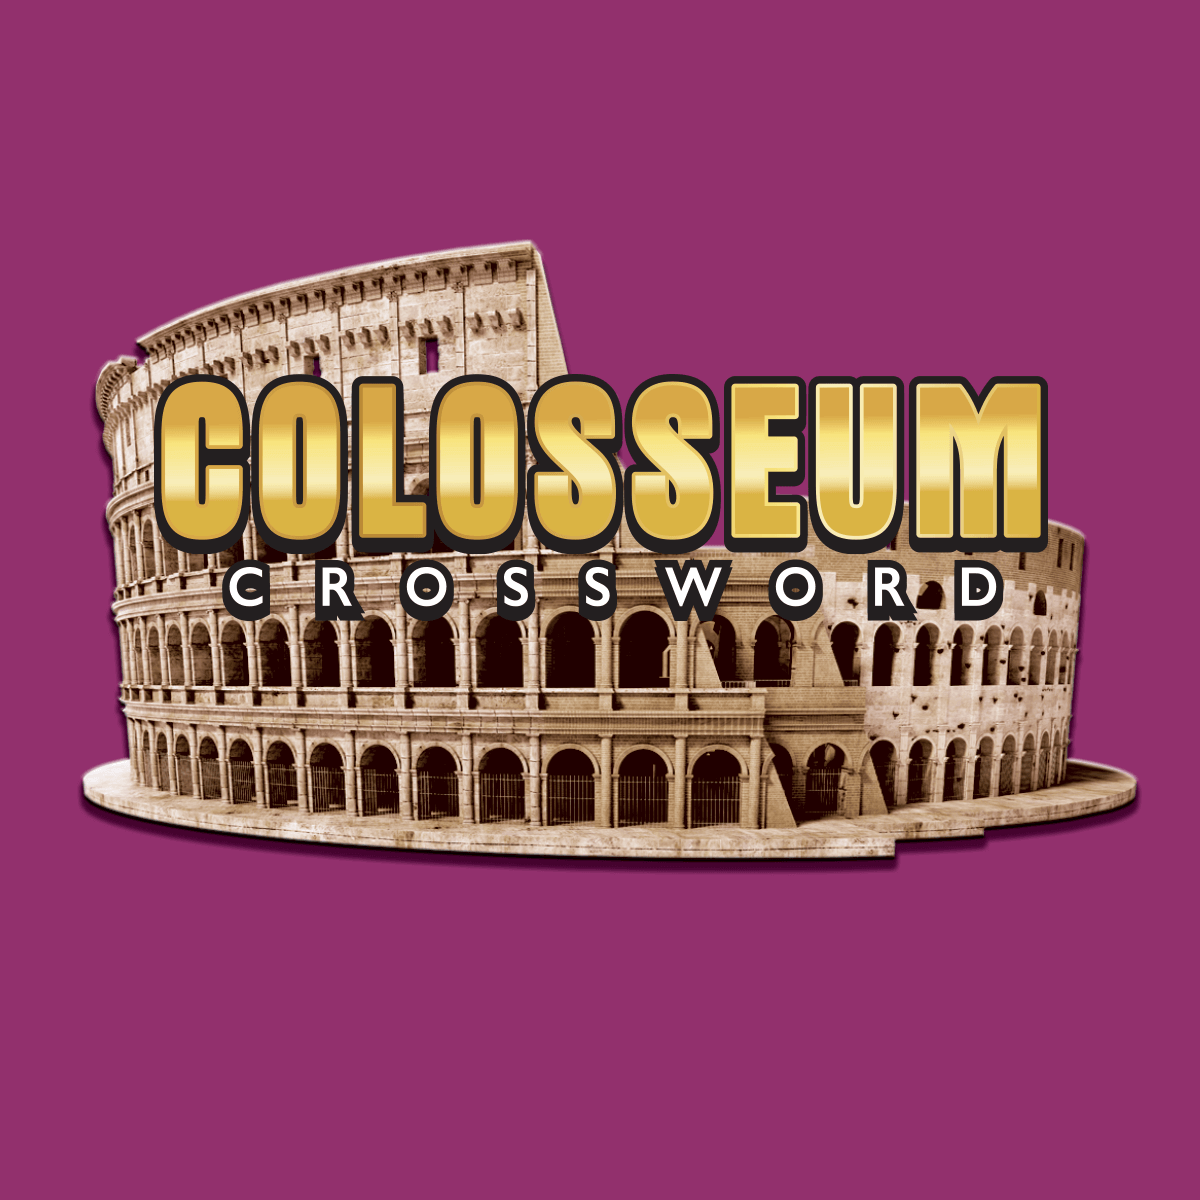 Colosseum celeb crossword